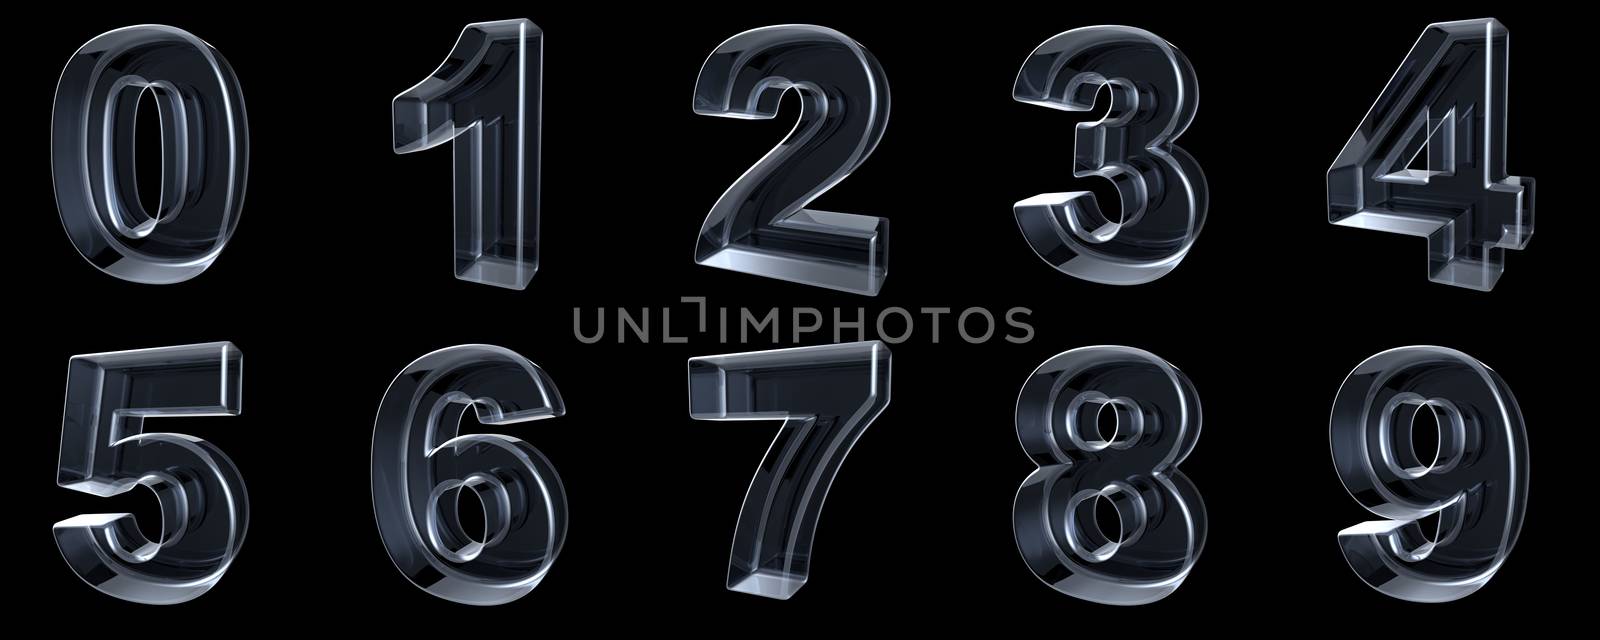 Transparent X-ray numbers 3D render illustration on black background